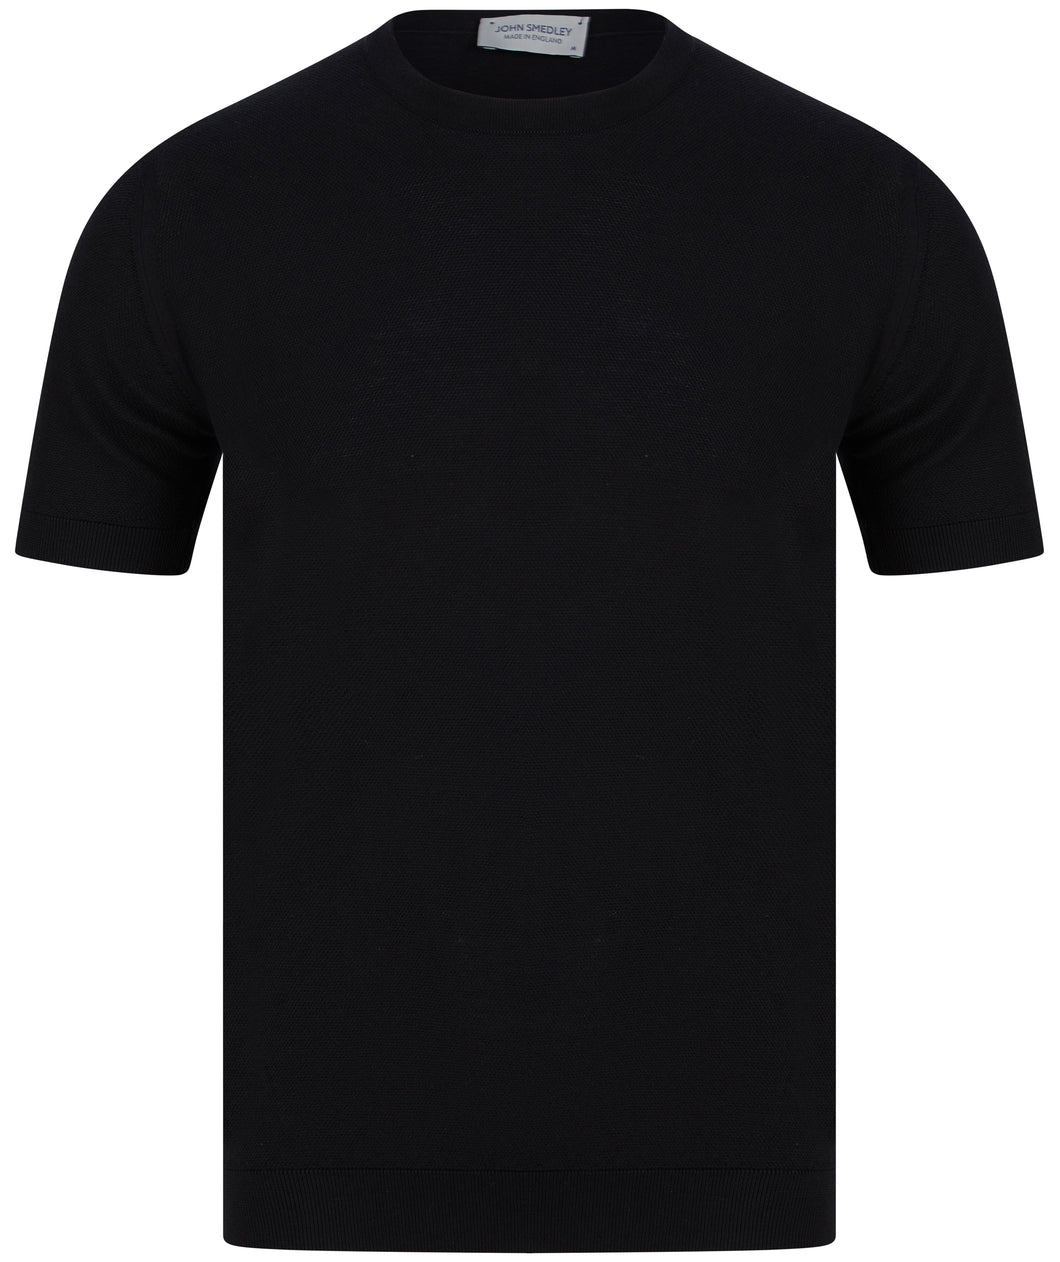 John Smedley Park Black T Shirt